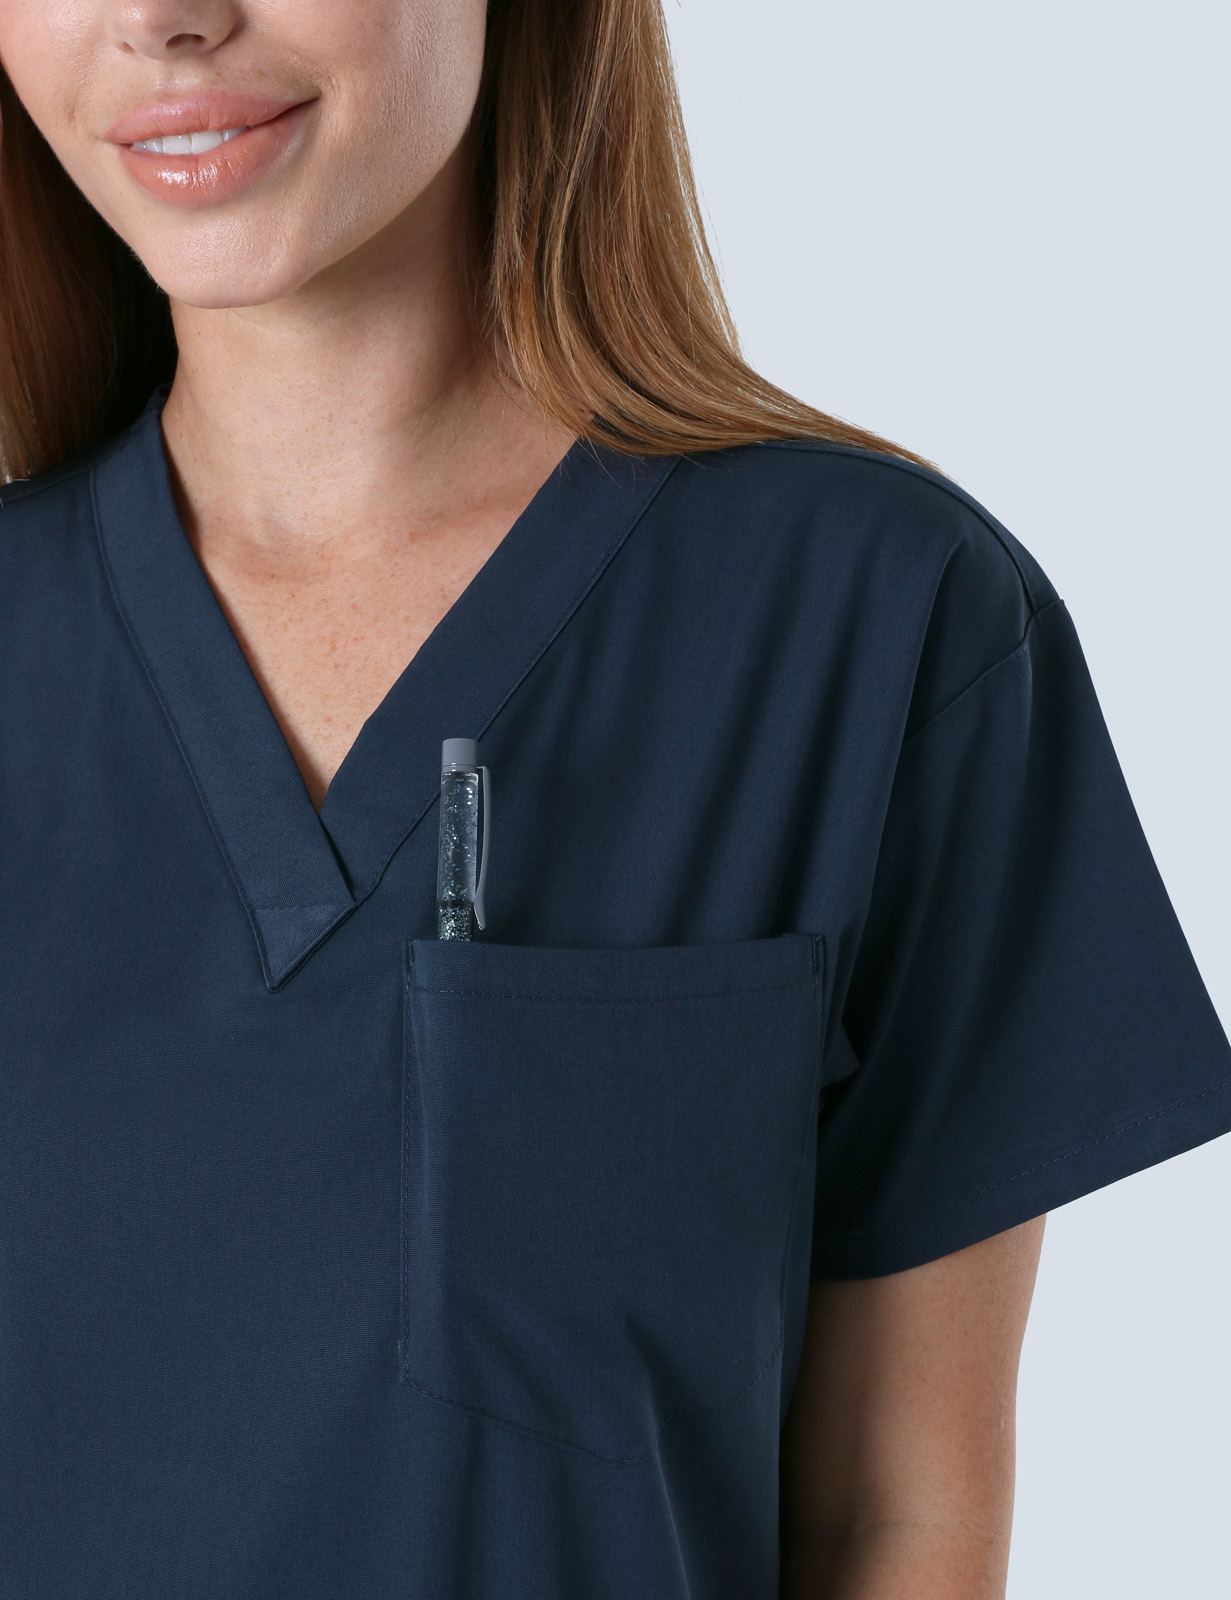 Bundaberg Hospital - MI Nurse (4 Pocket Scrub Top and Cargo Pants in Navy incl Logos)